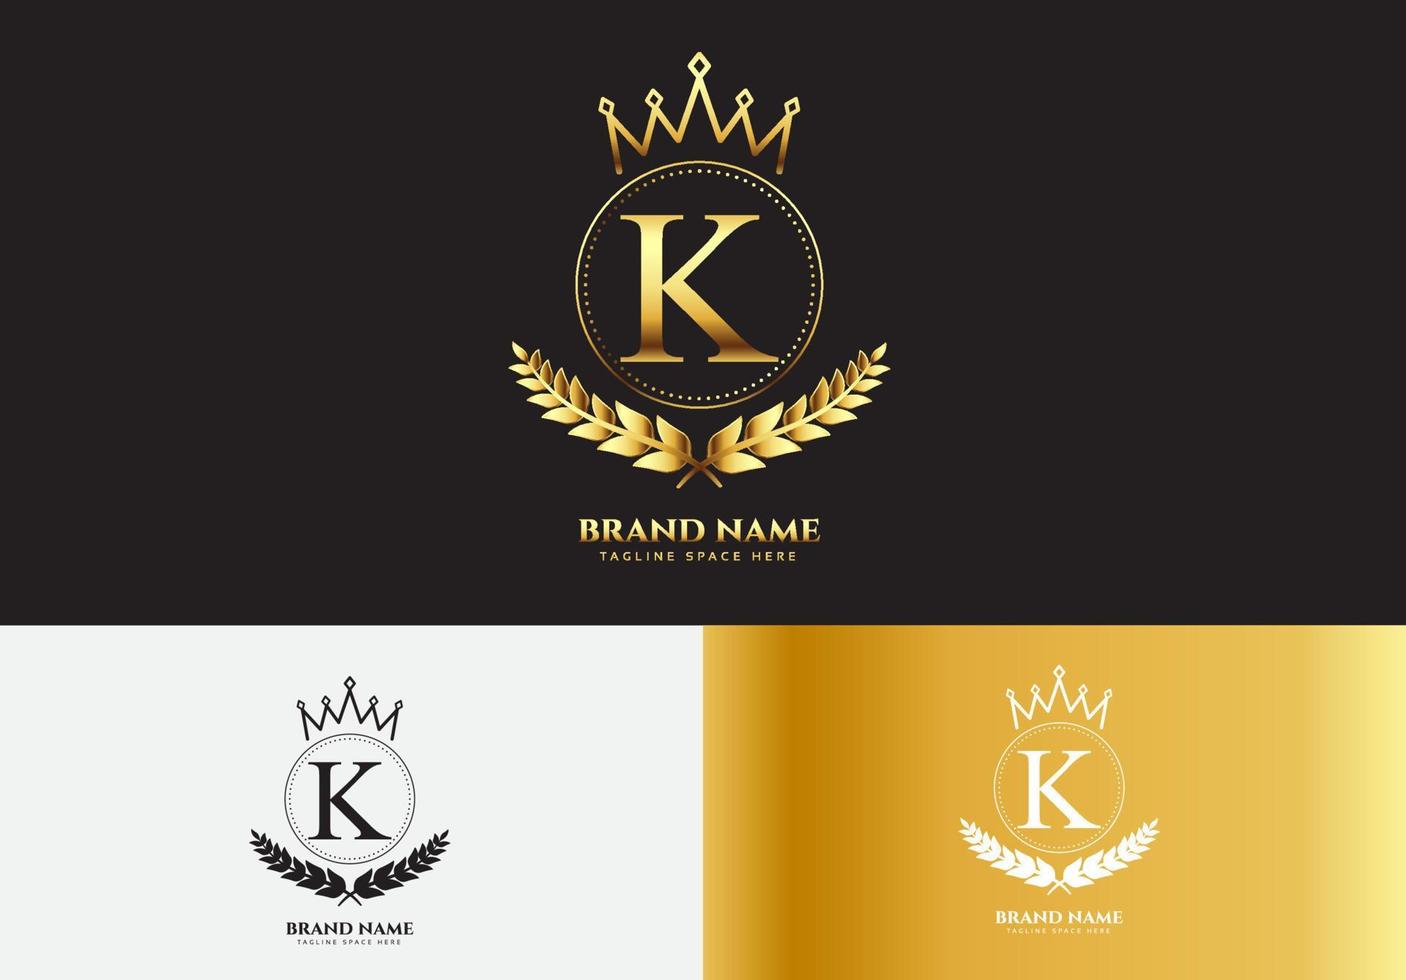 Buchstabe k Gold Luxus Krone Logo Konzept vektor